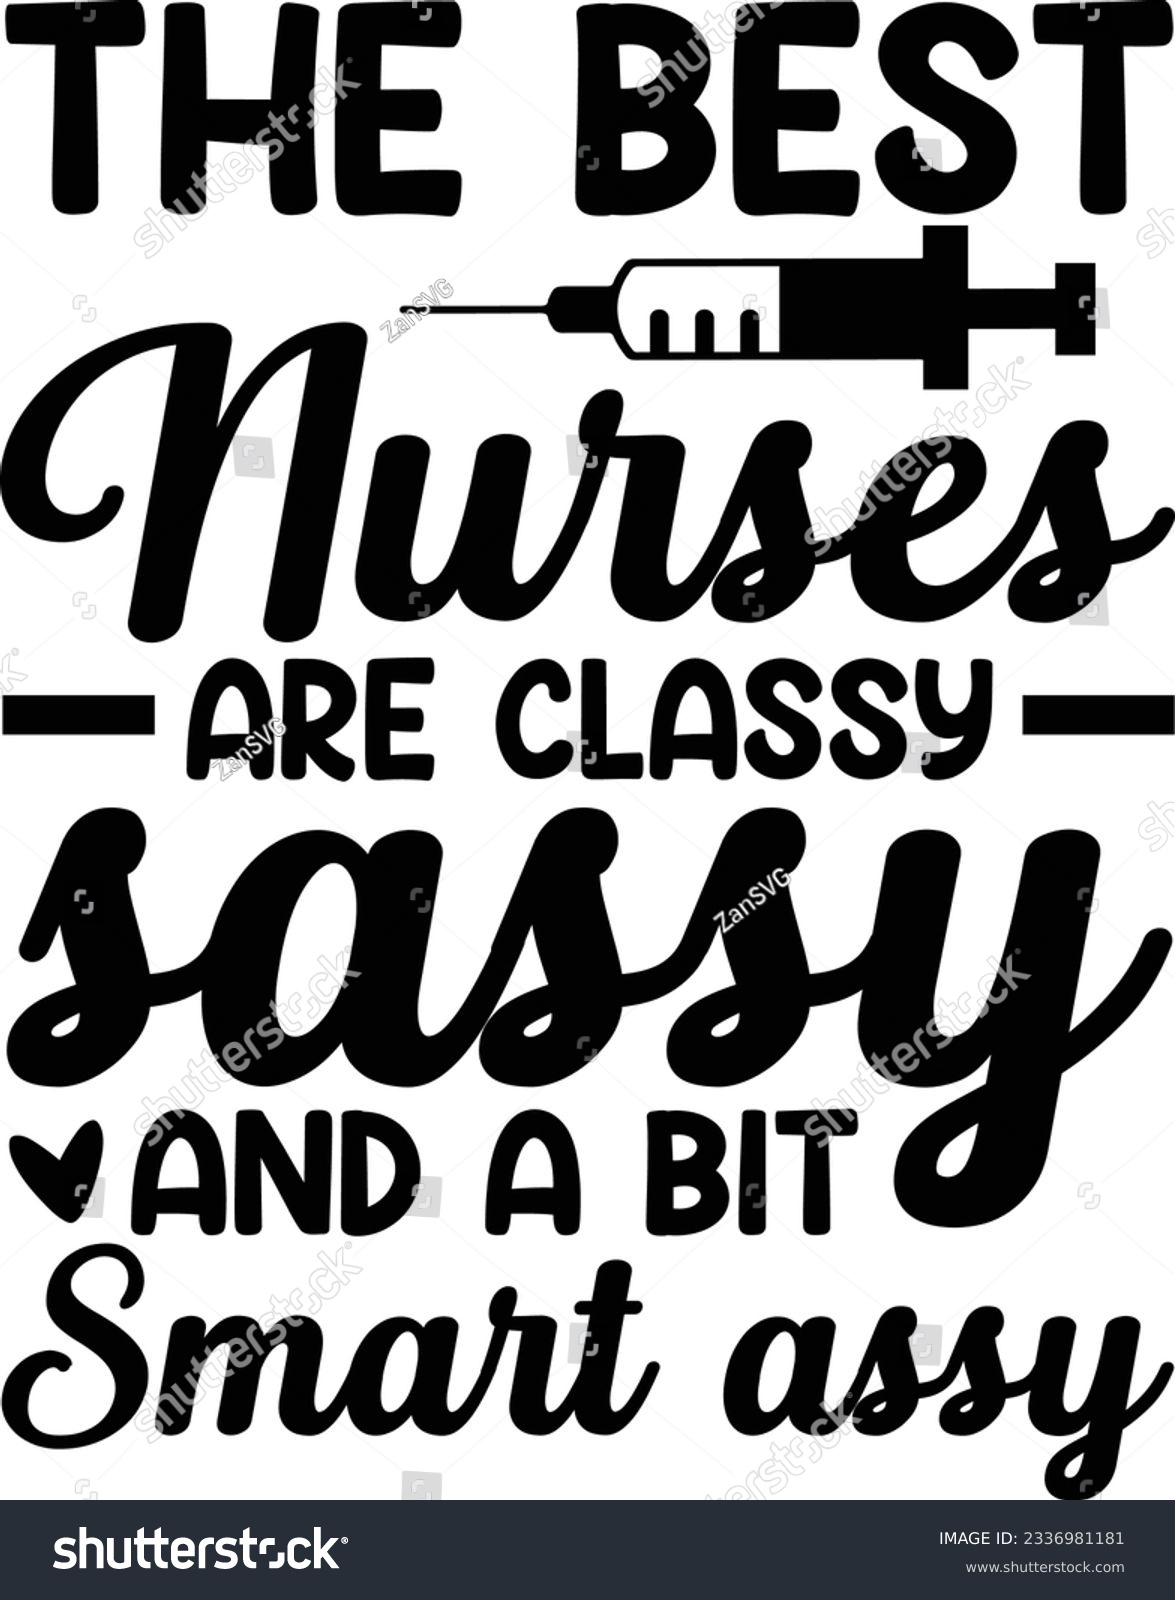 SVG of The best nurses are classy sassy and a bit smart assy vector file, Nurse svg svg